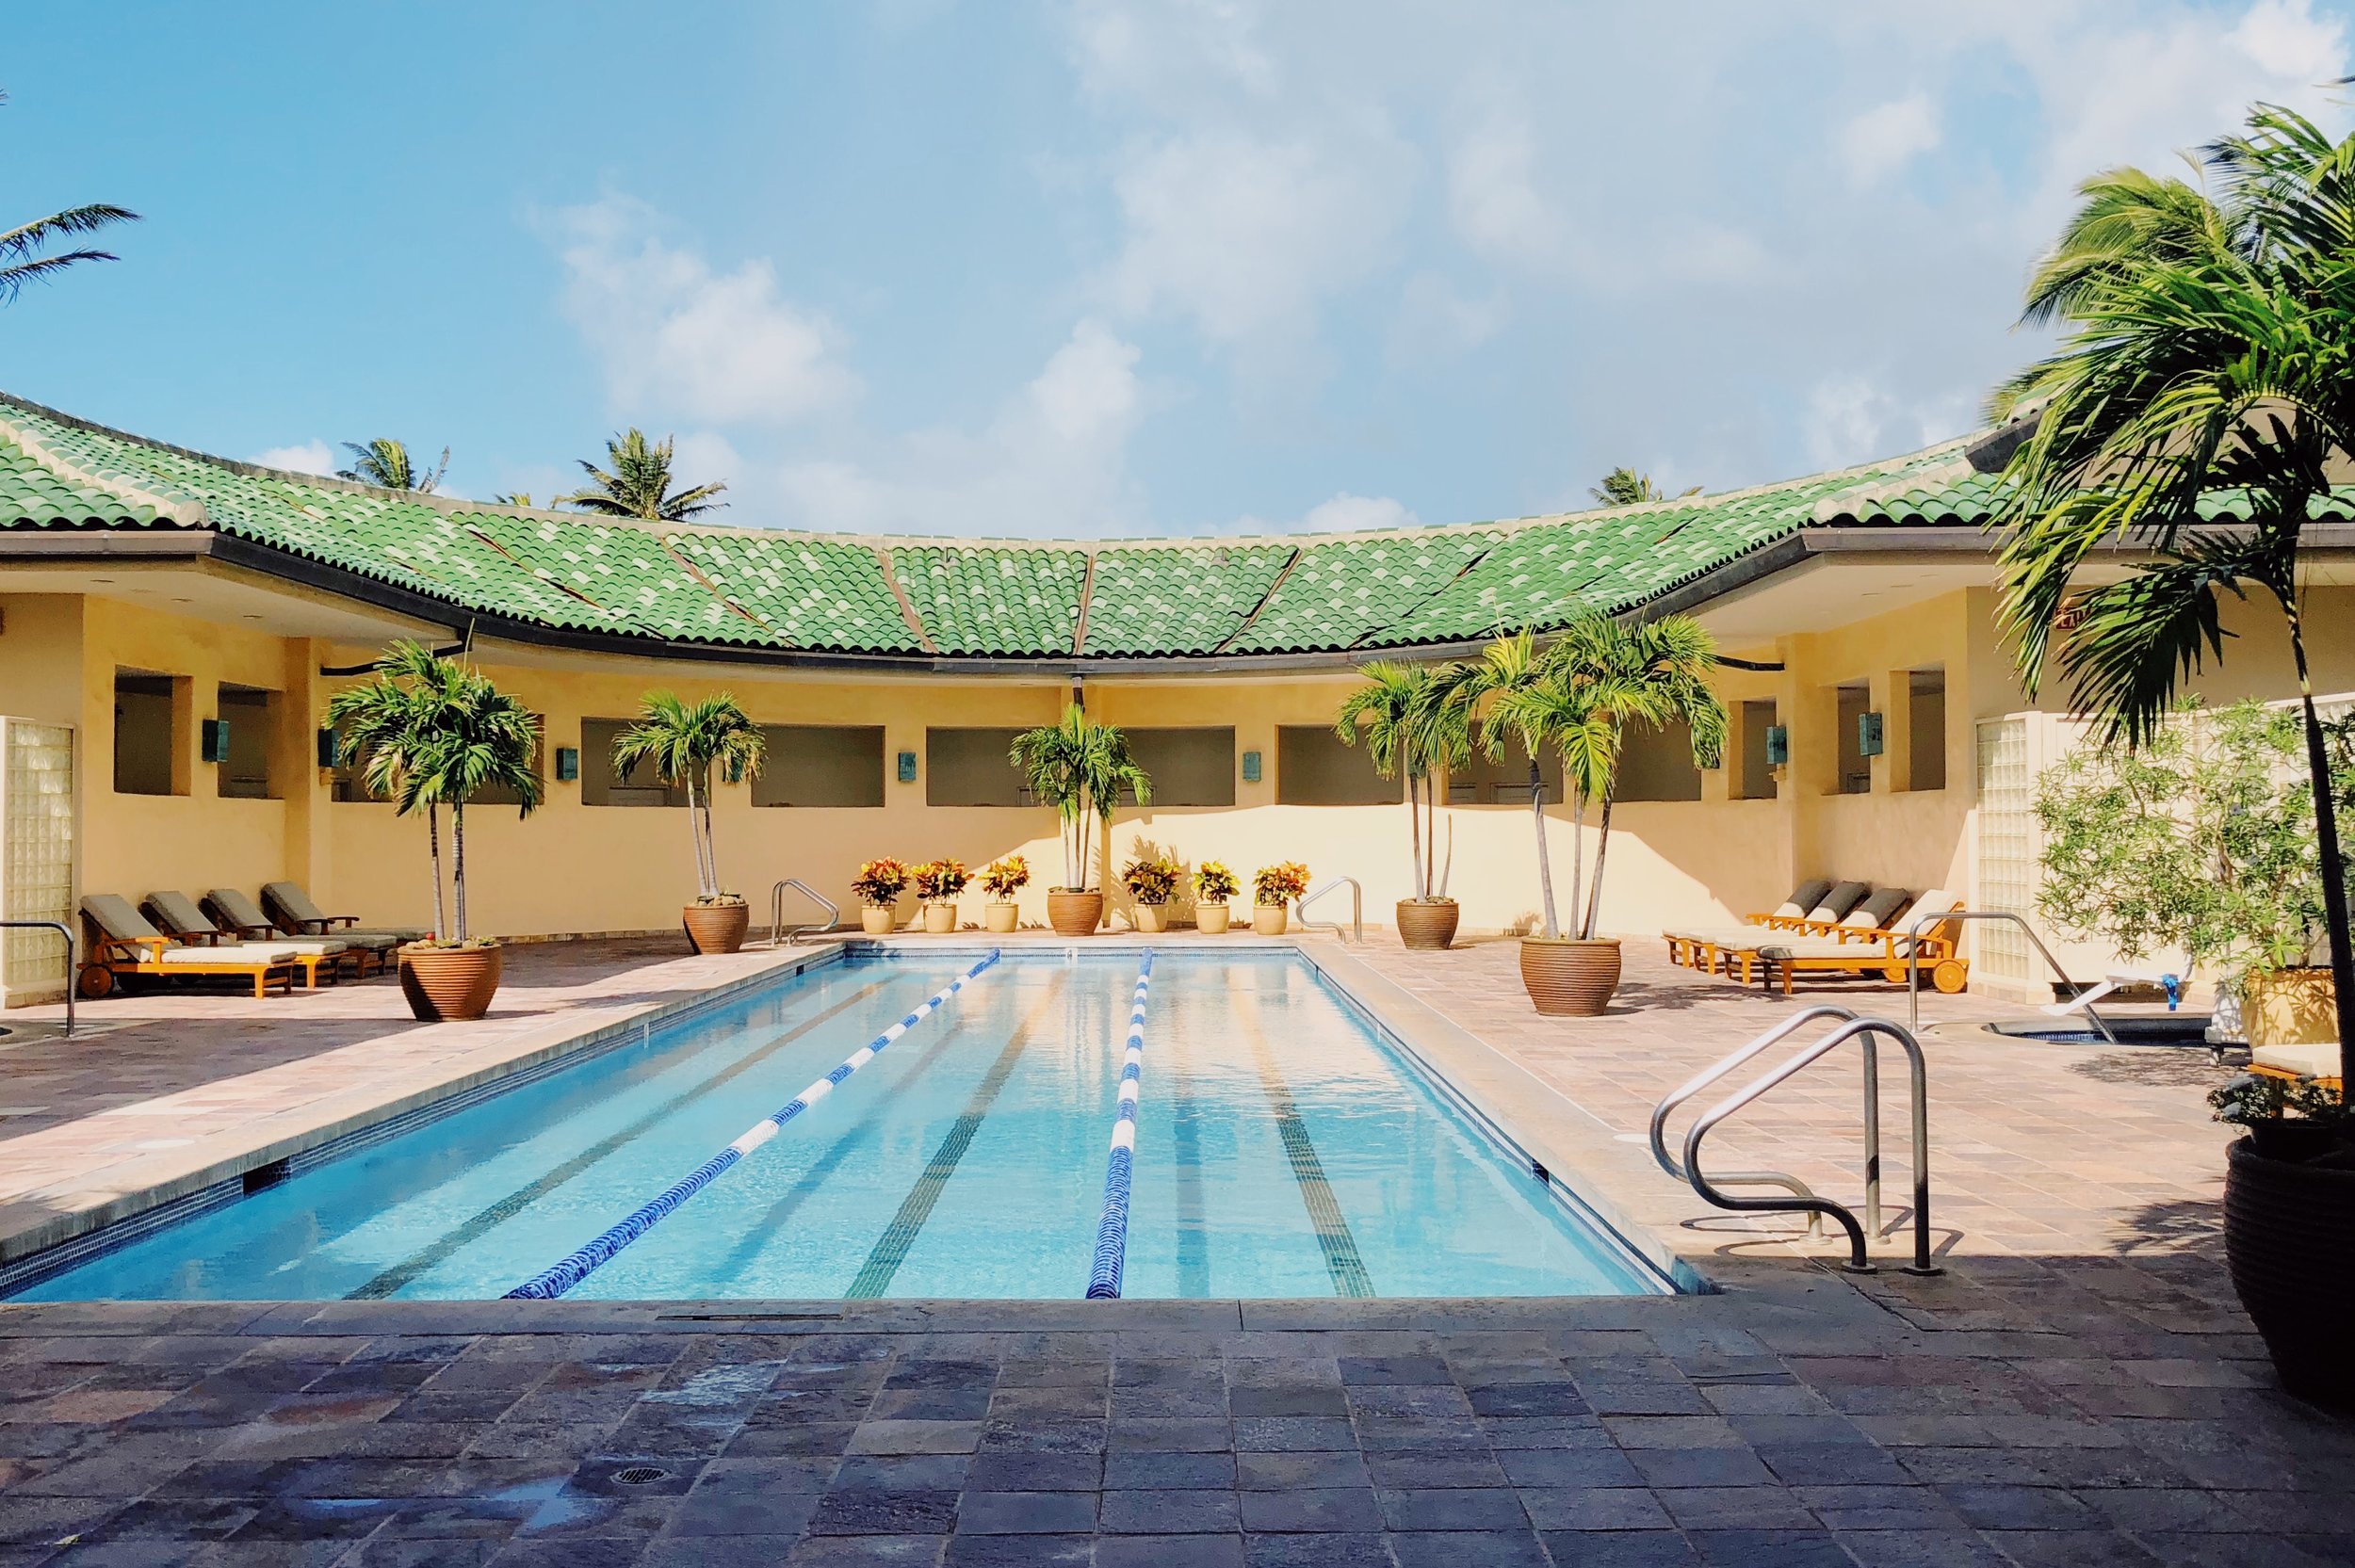 Review of Grand Hyatt Kauai Anara Spa